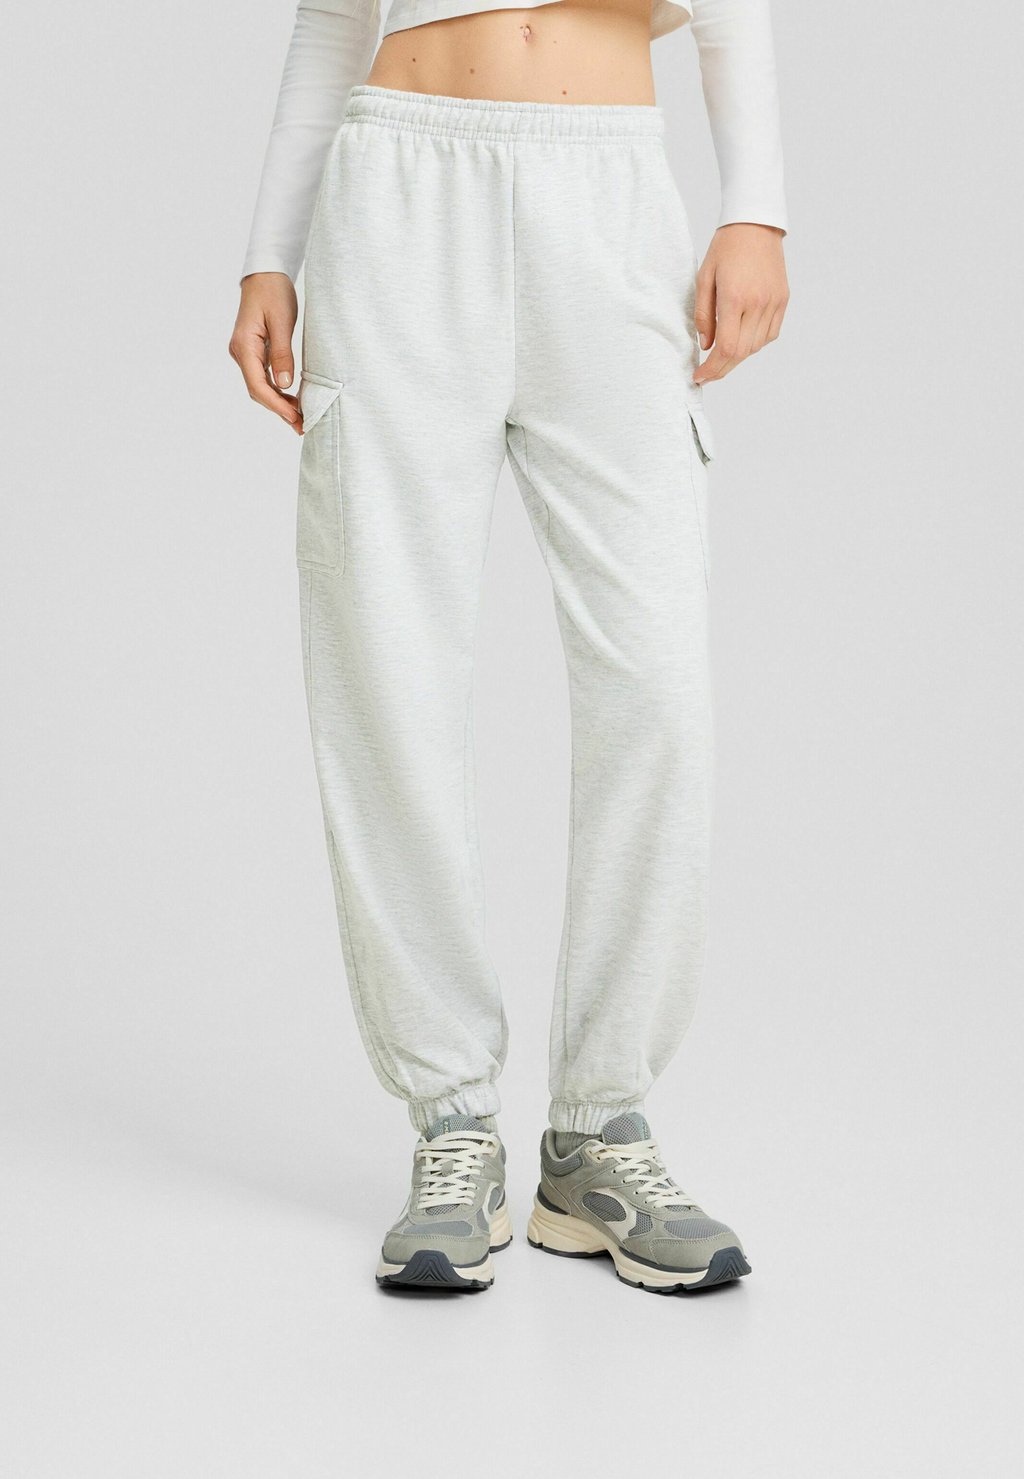 Спортивные брюки Plush And Detail Jogger Bershka, цвет mottled grey брюки из ткани bershka цвет mottled grey